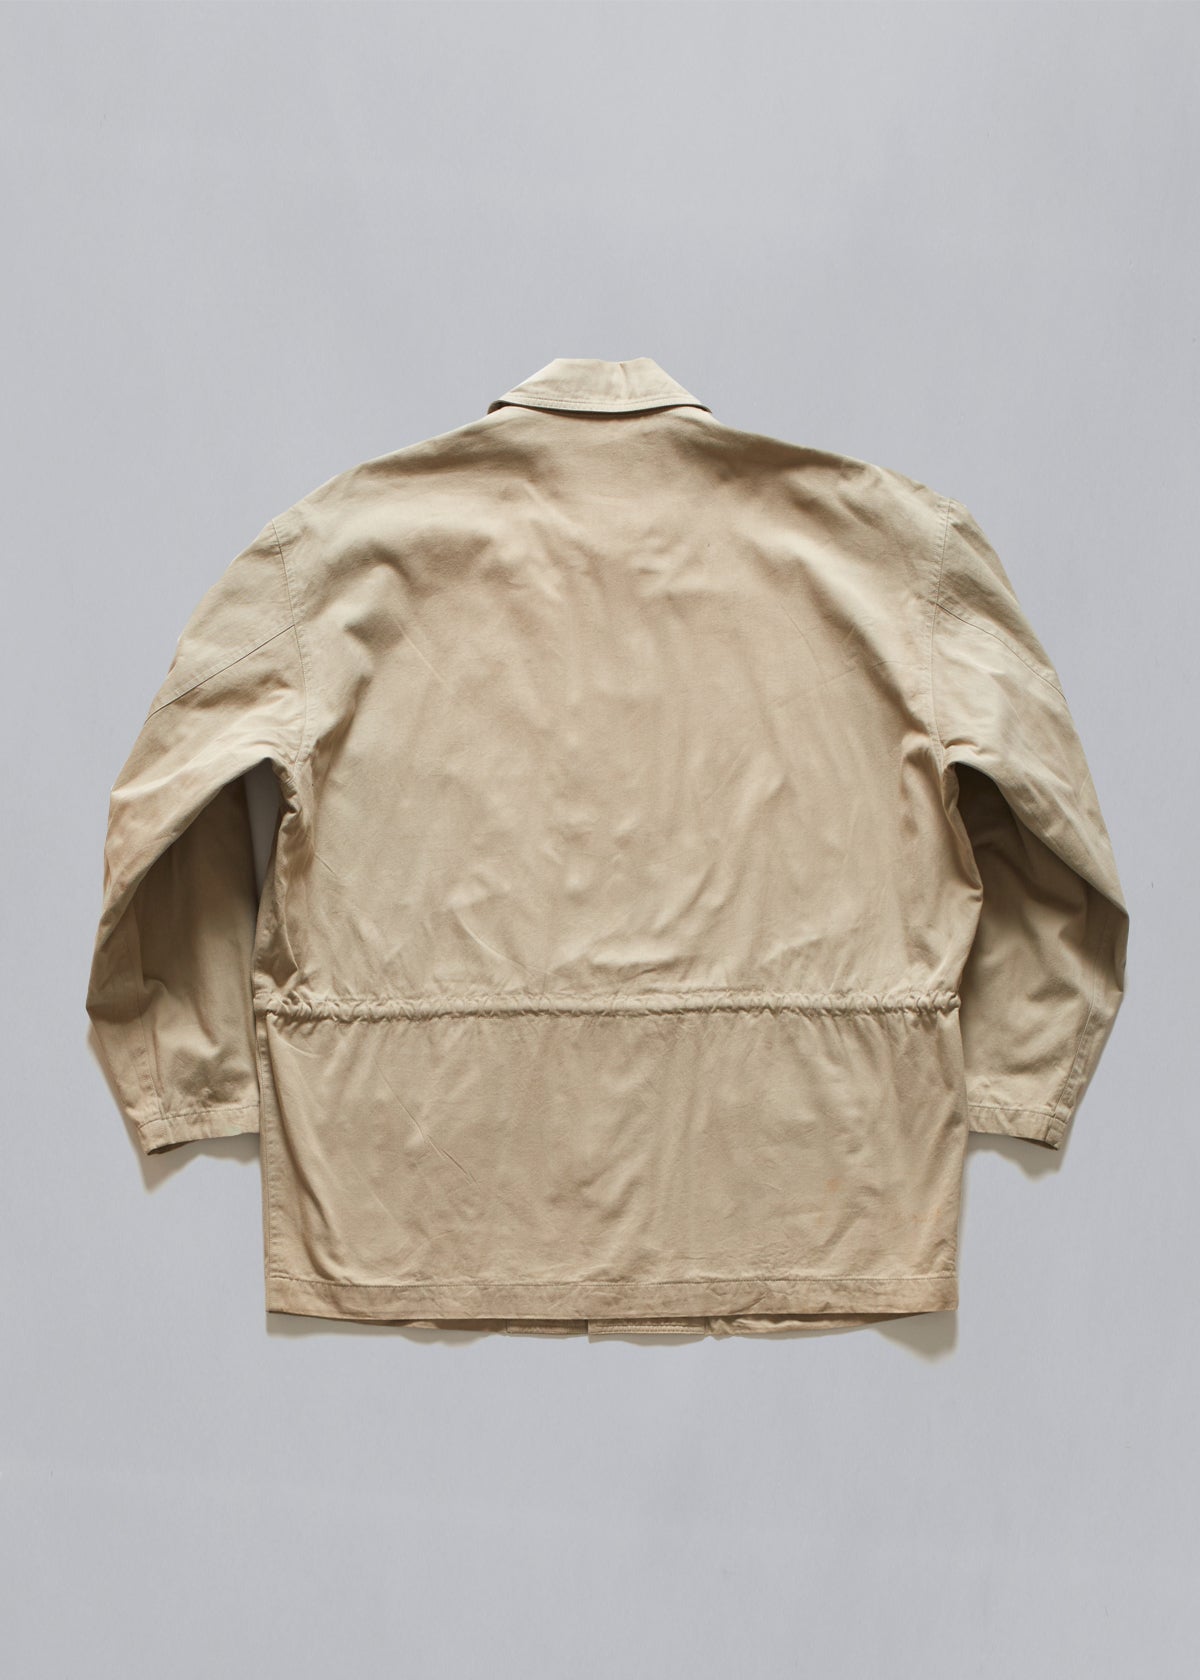 Homme Classic Sports Jacket 1988 - Medium - The Archivist Store